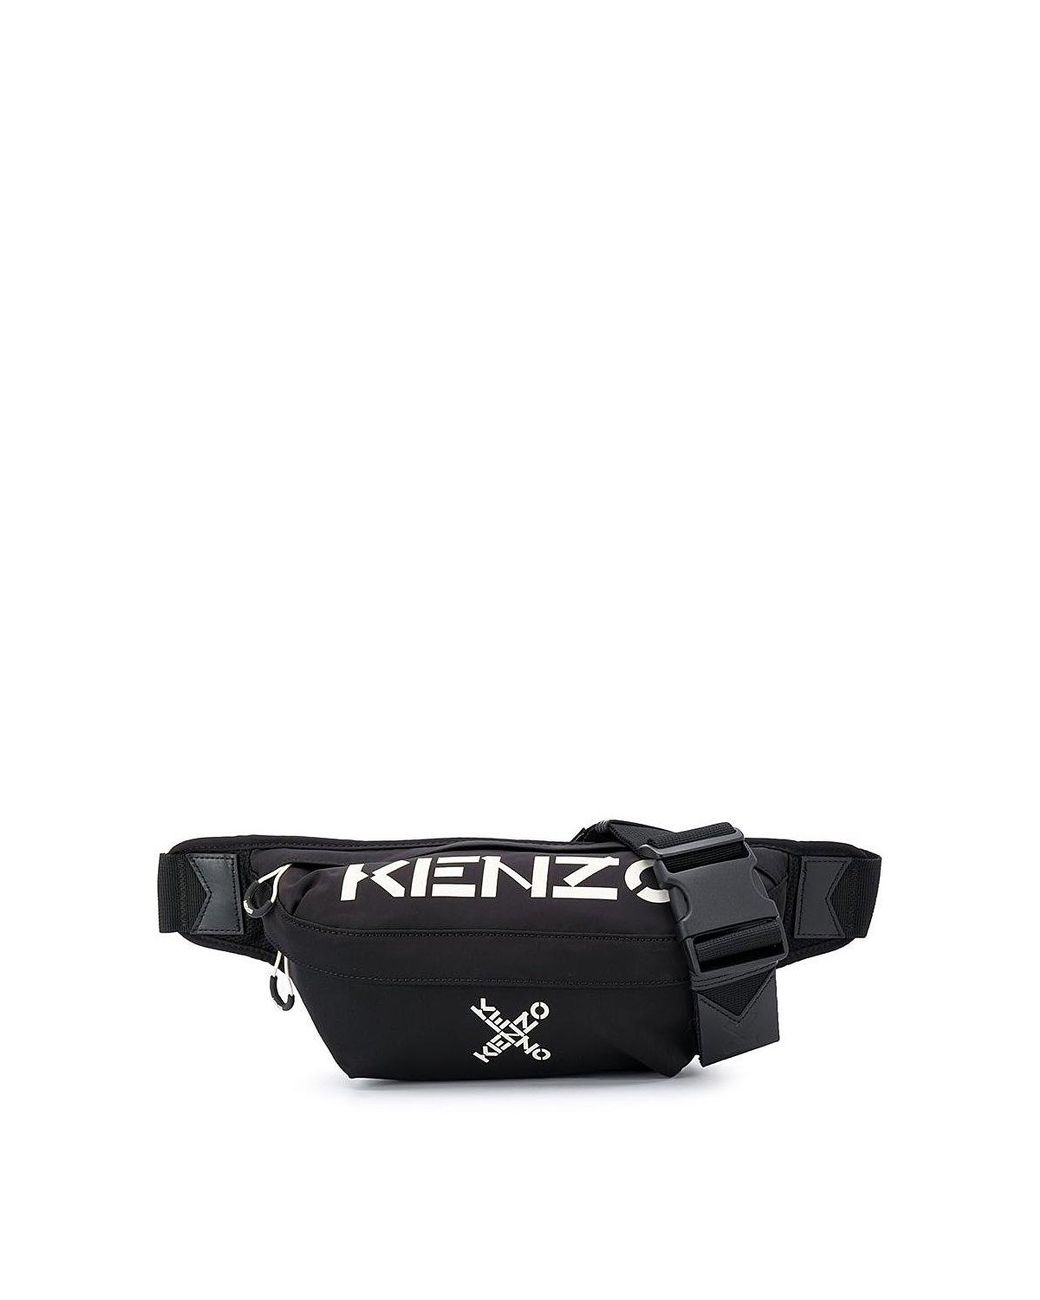 KENZO Cross Logo Cross Body Bag in Black for Men - Lyst